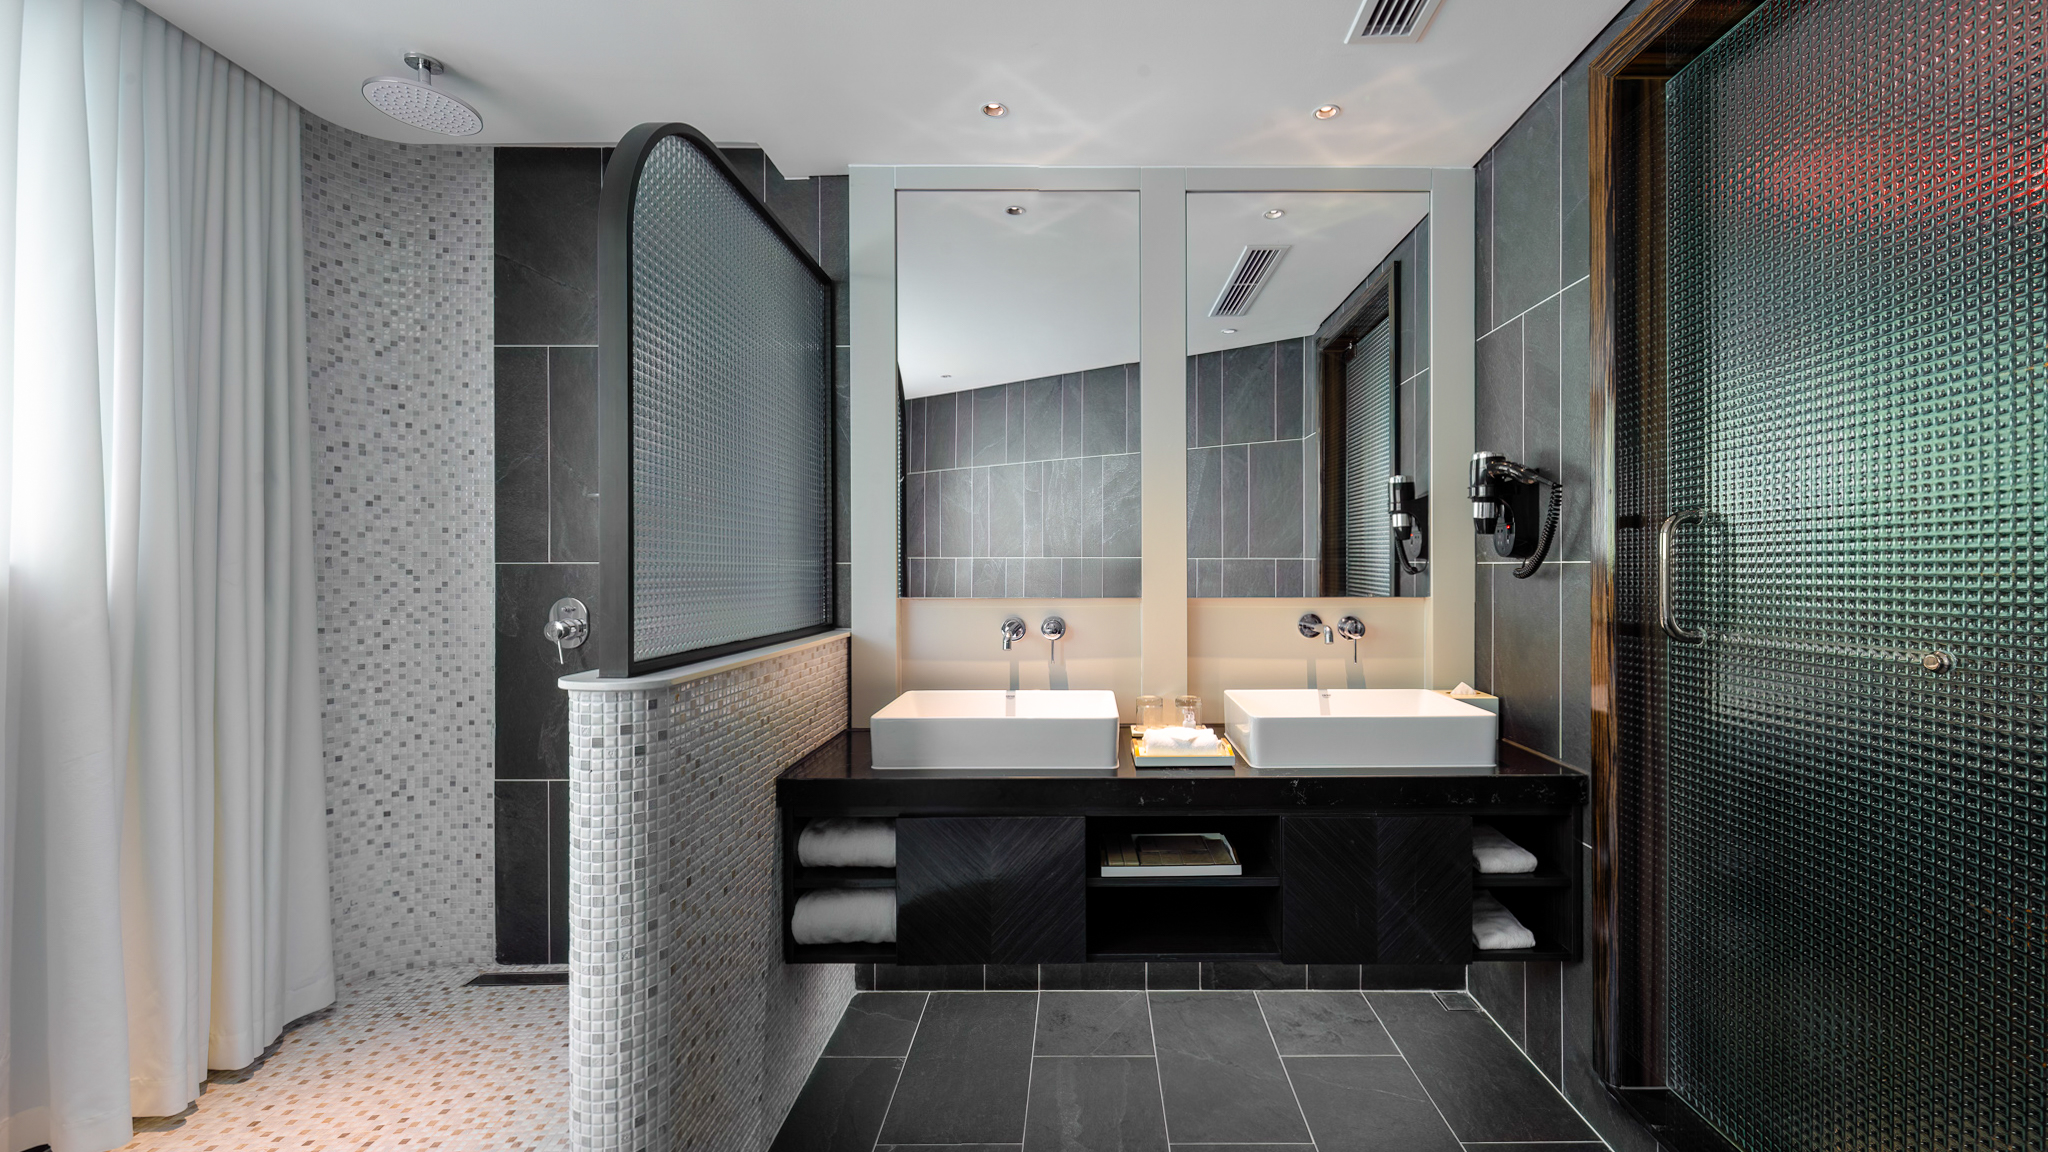 The elegant and high-class bathroom